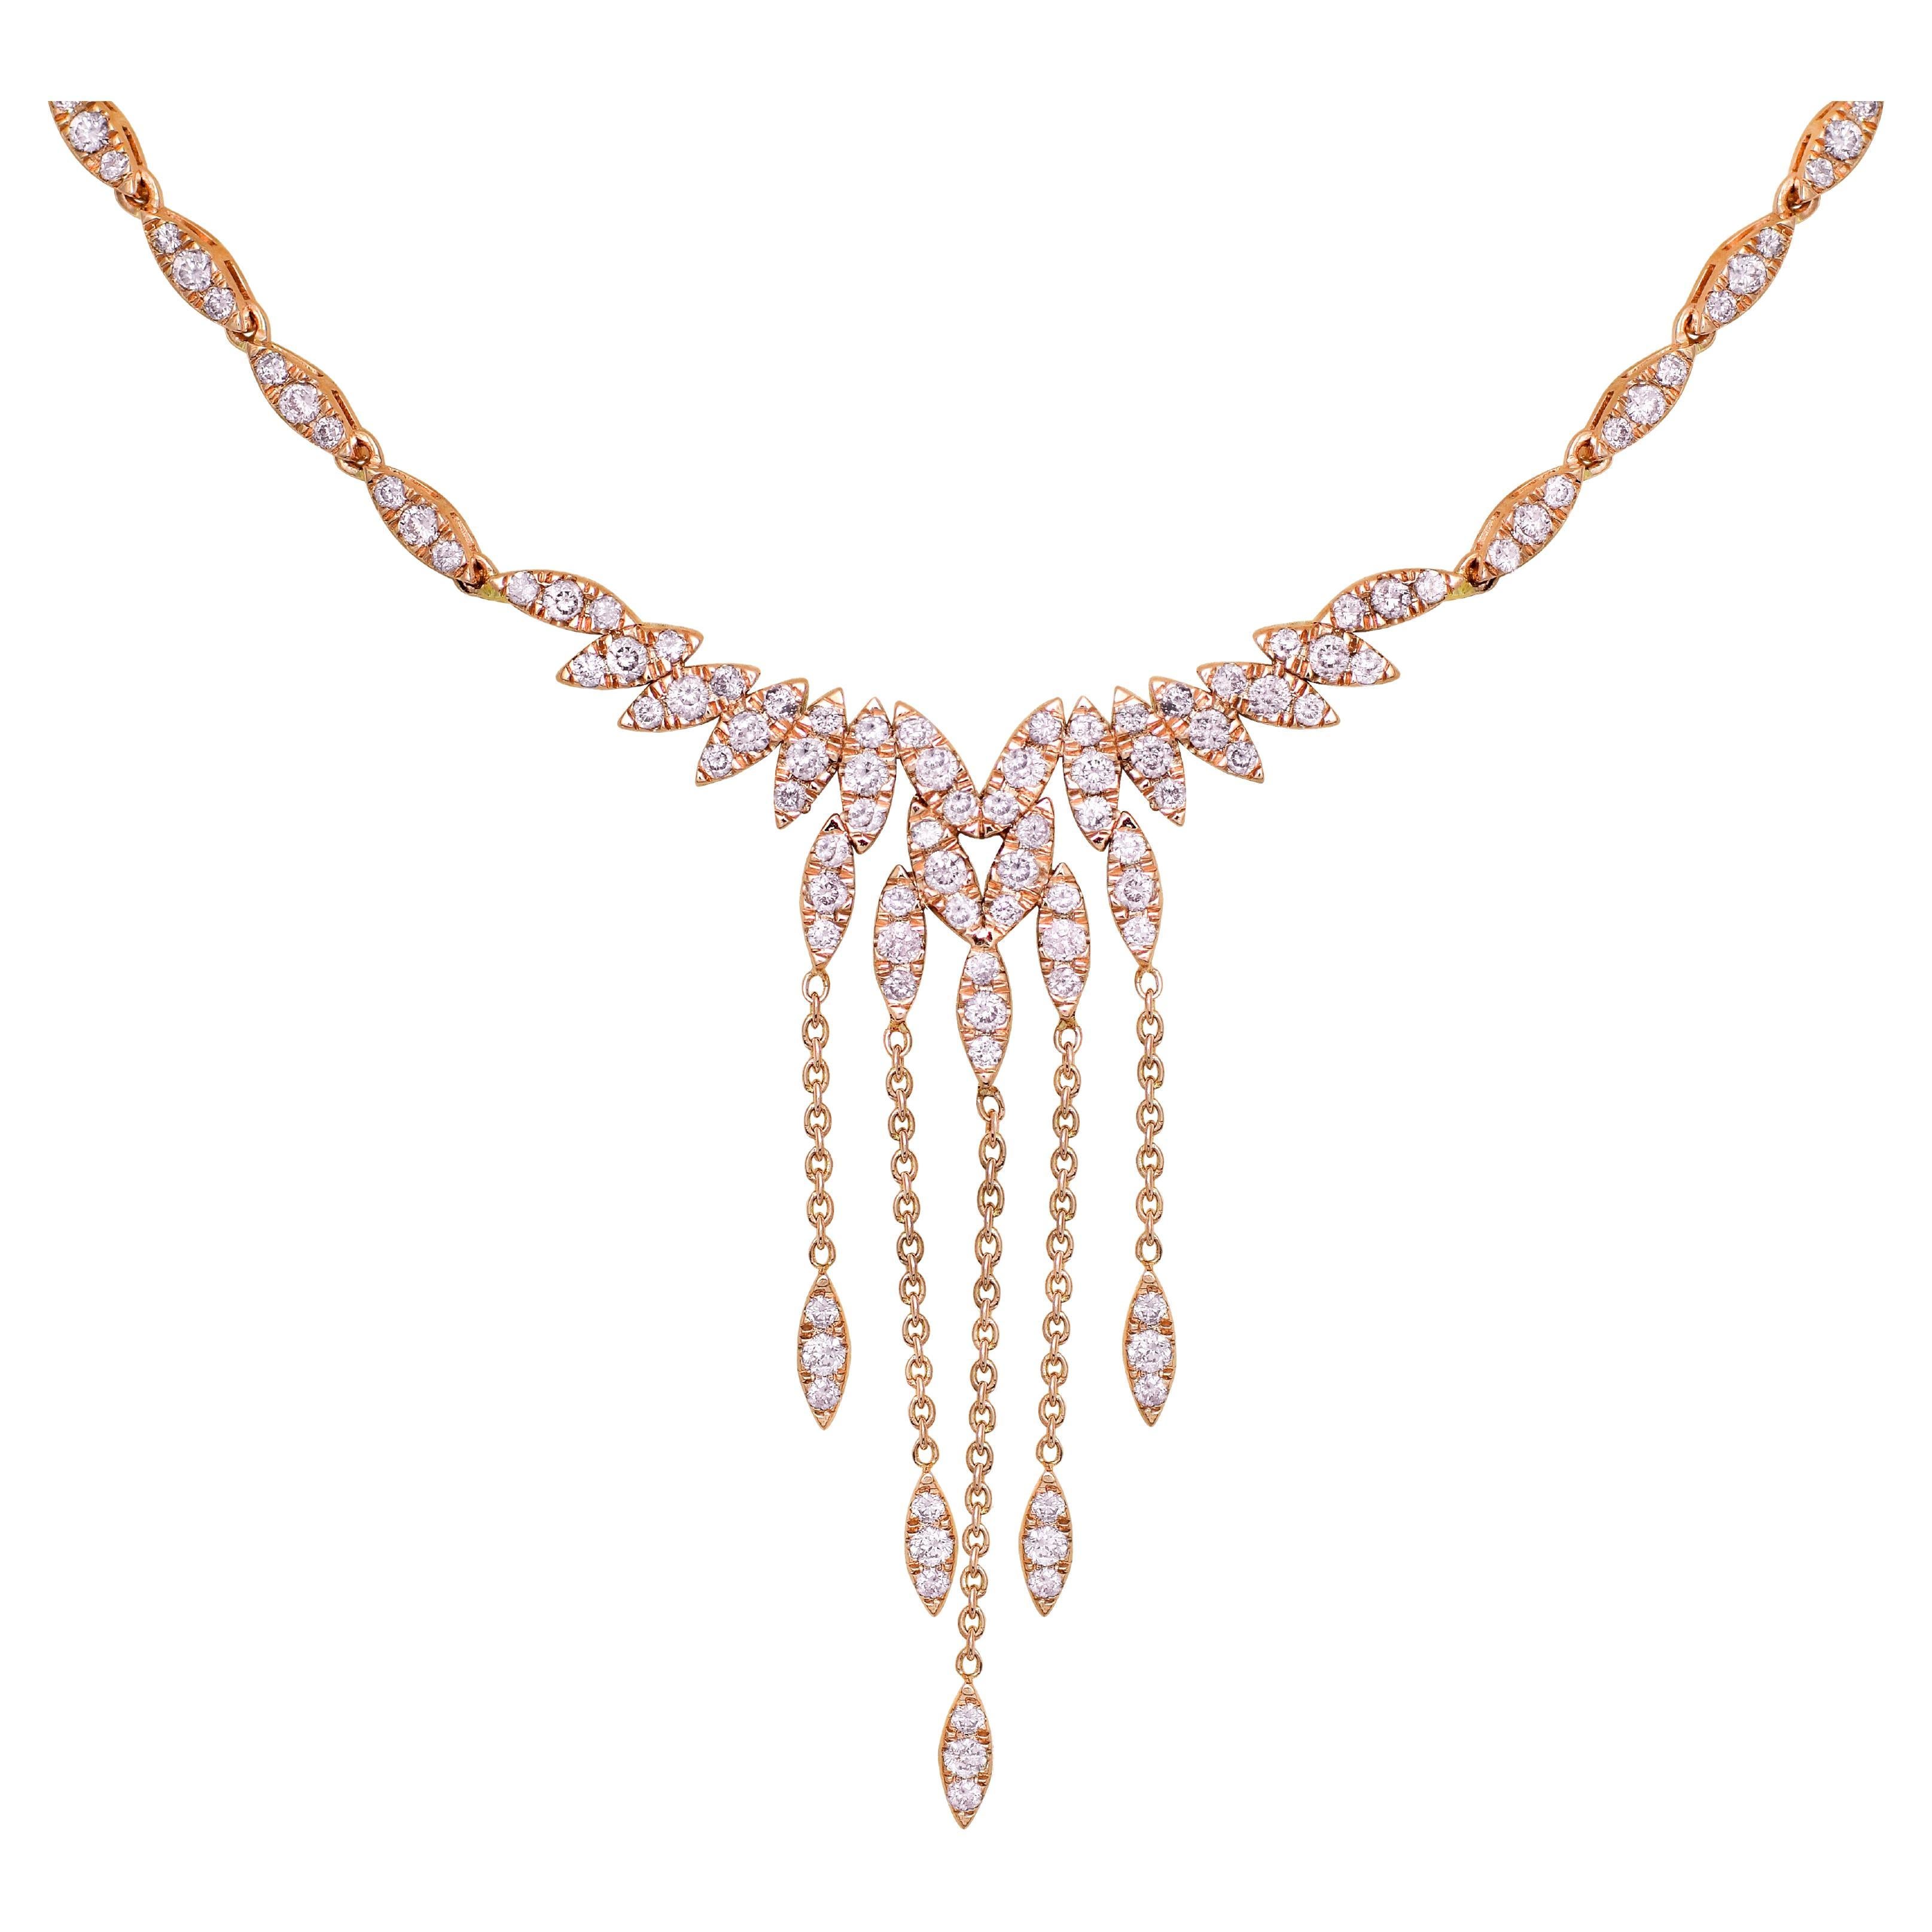 IGI 14K 1.81 ct Natural Pink Diamonds  Art Deco Design Necklace